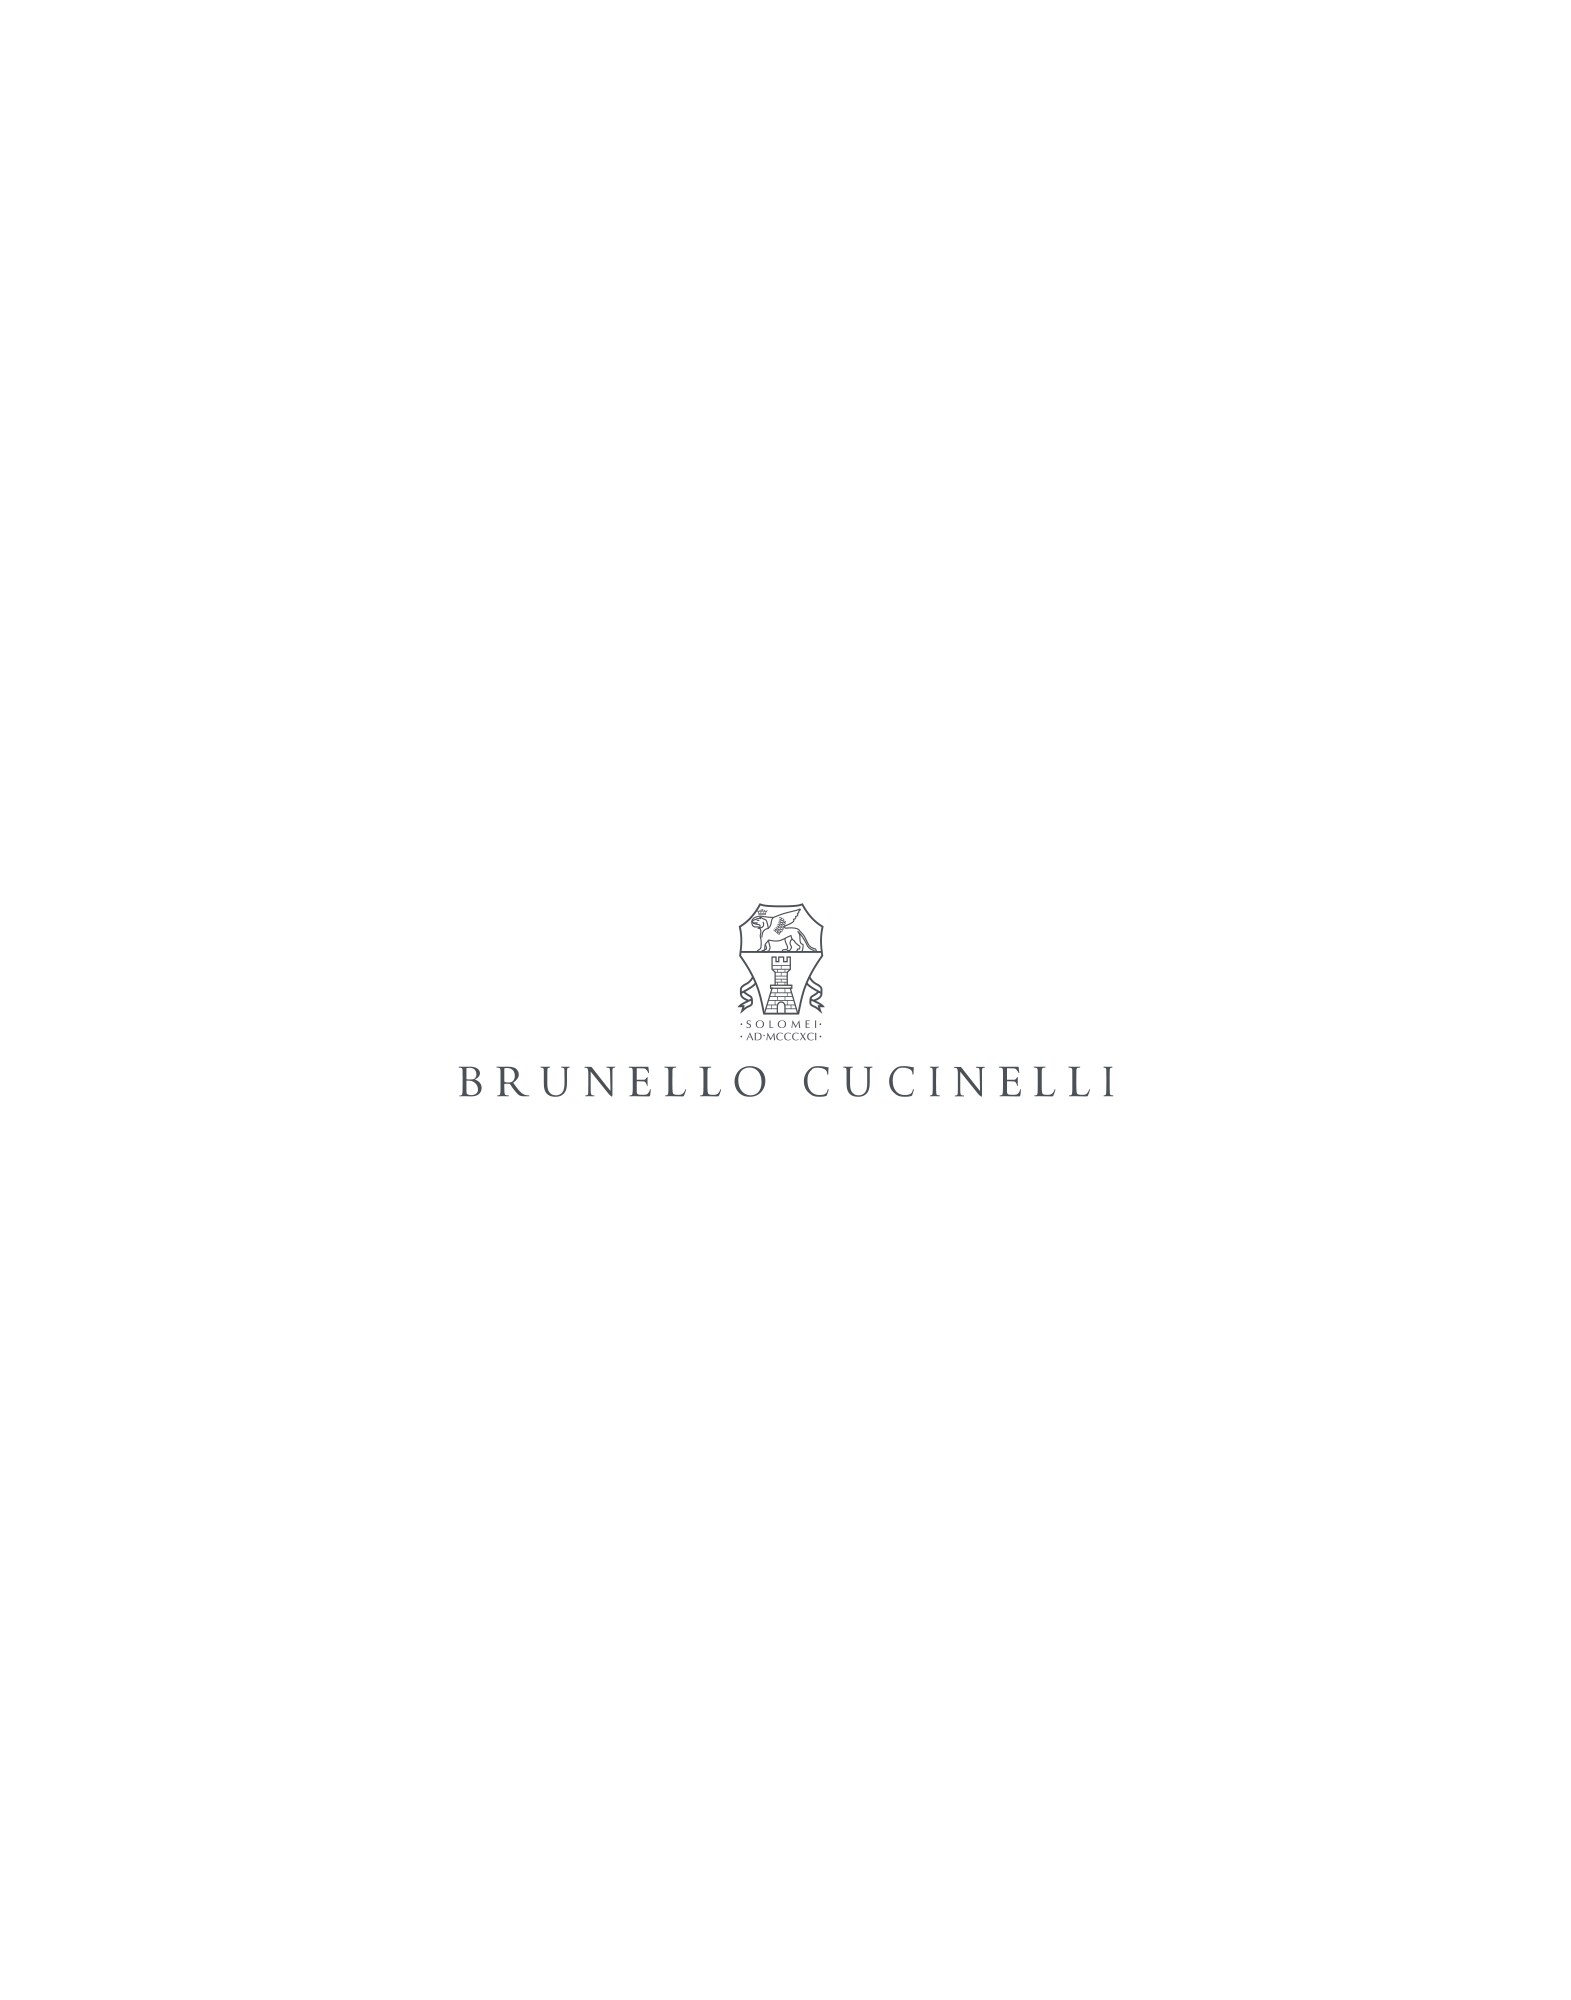 Discover Look 241MOUTFITTENNIS1 - Brunello Cucinelli